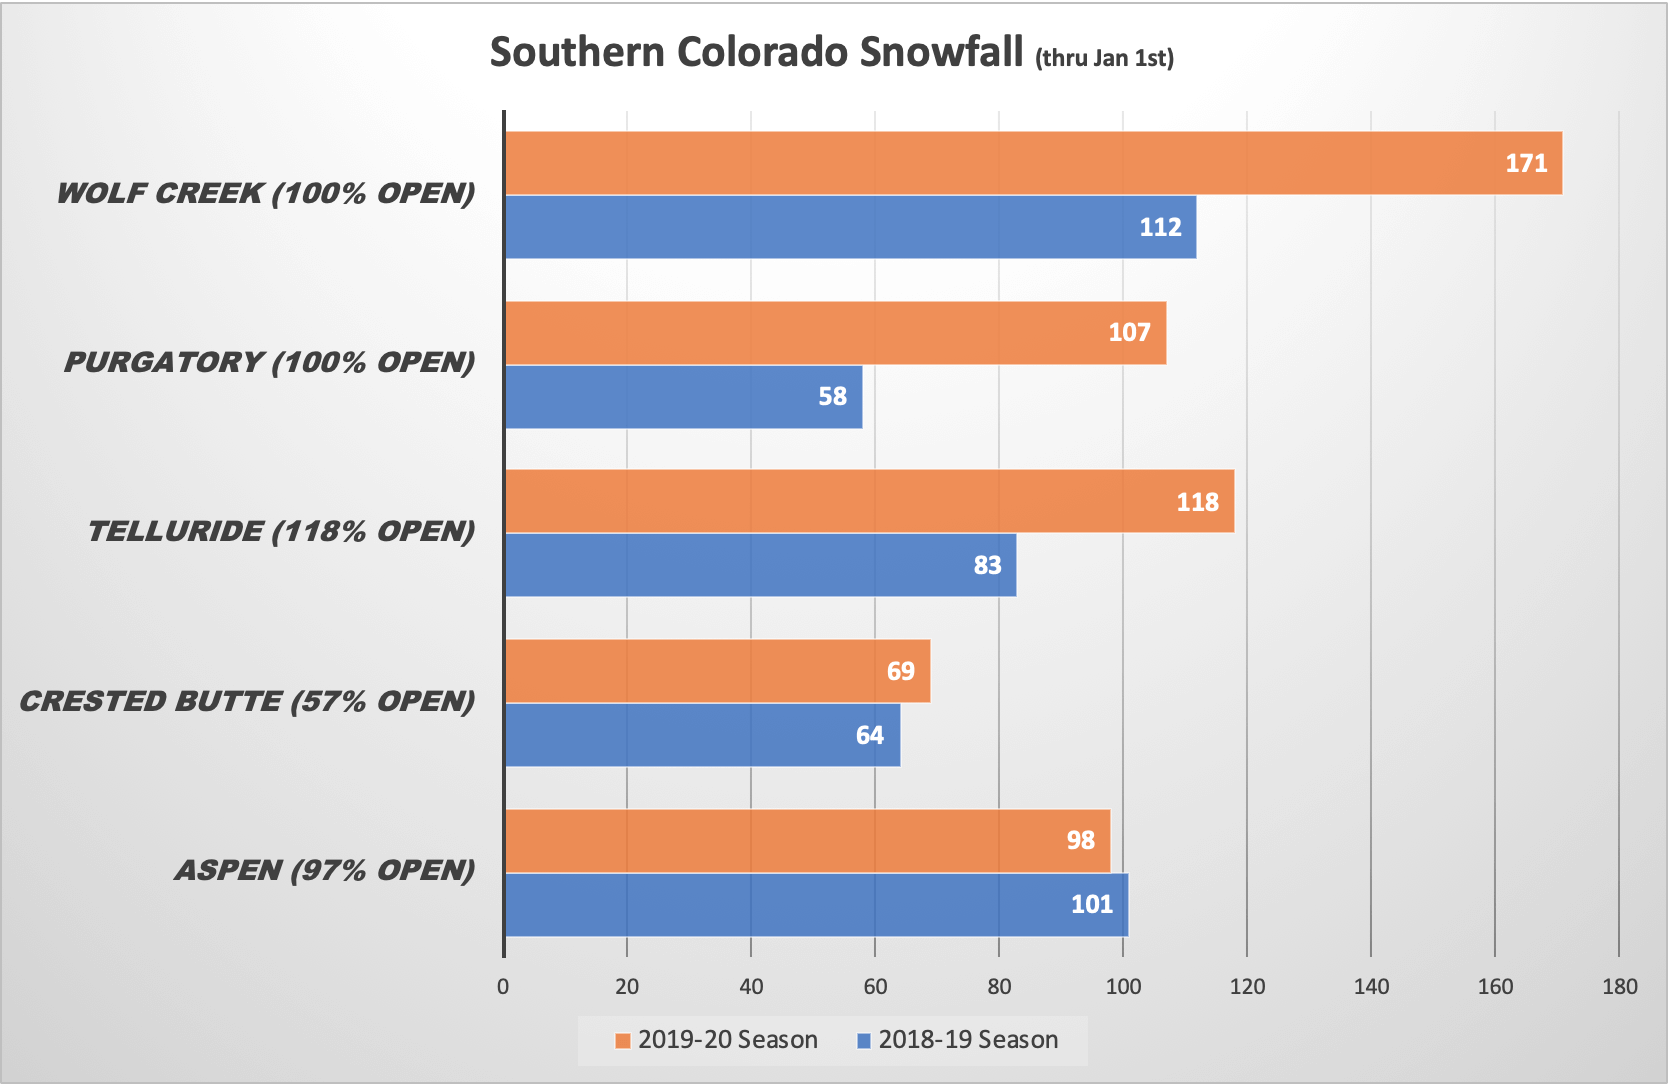 Southern Colorado Ski Resort Snowfall Comparison